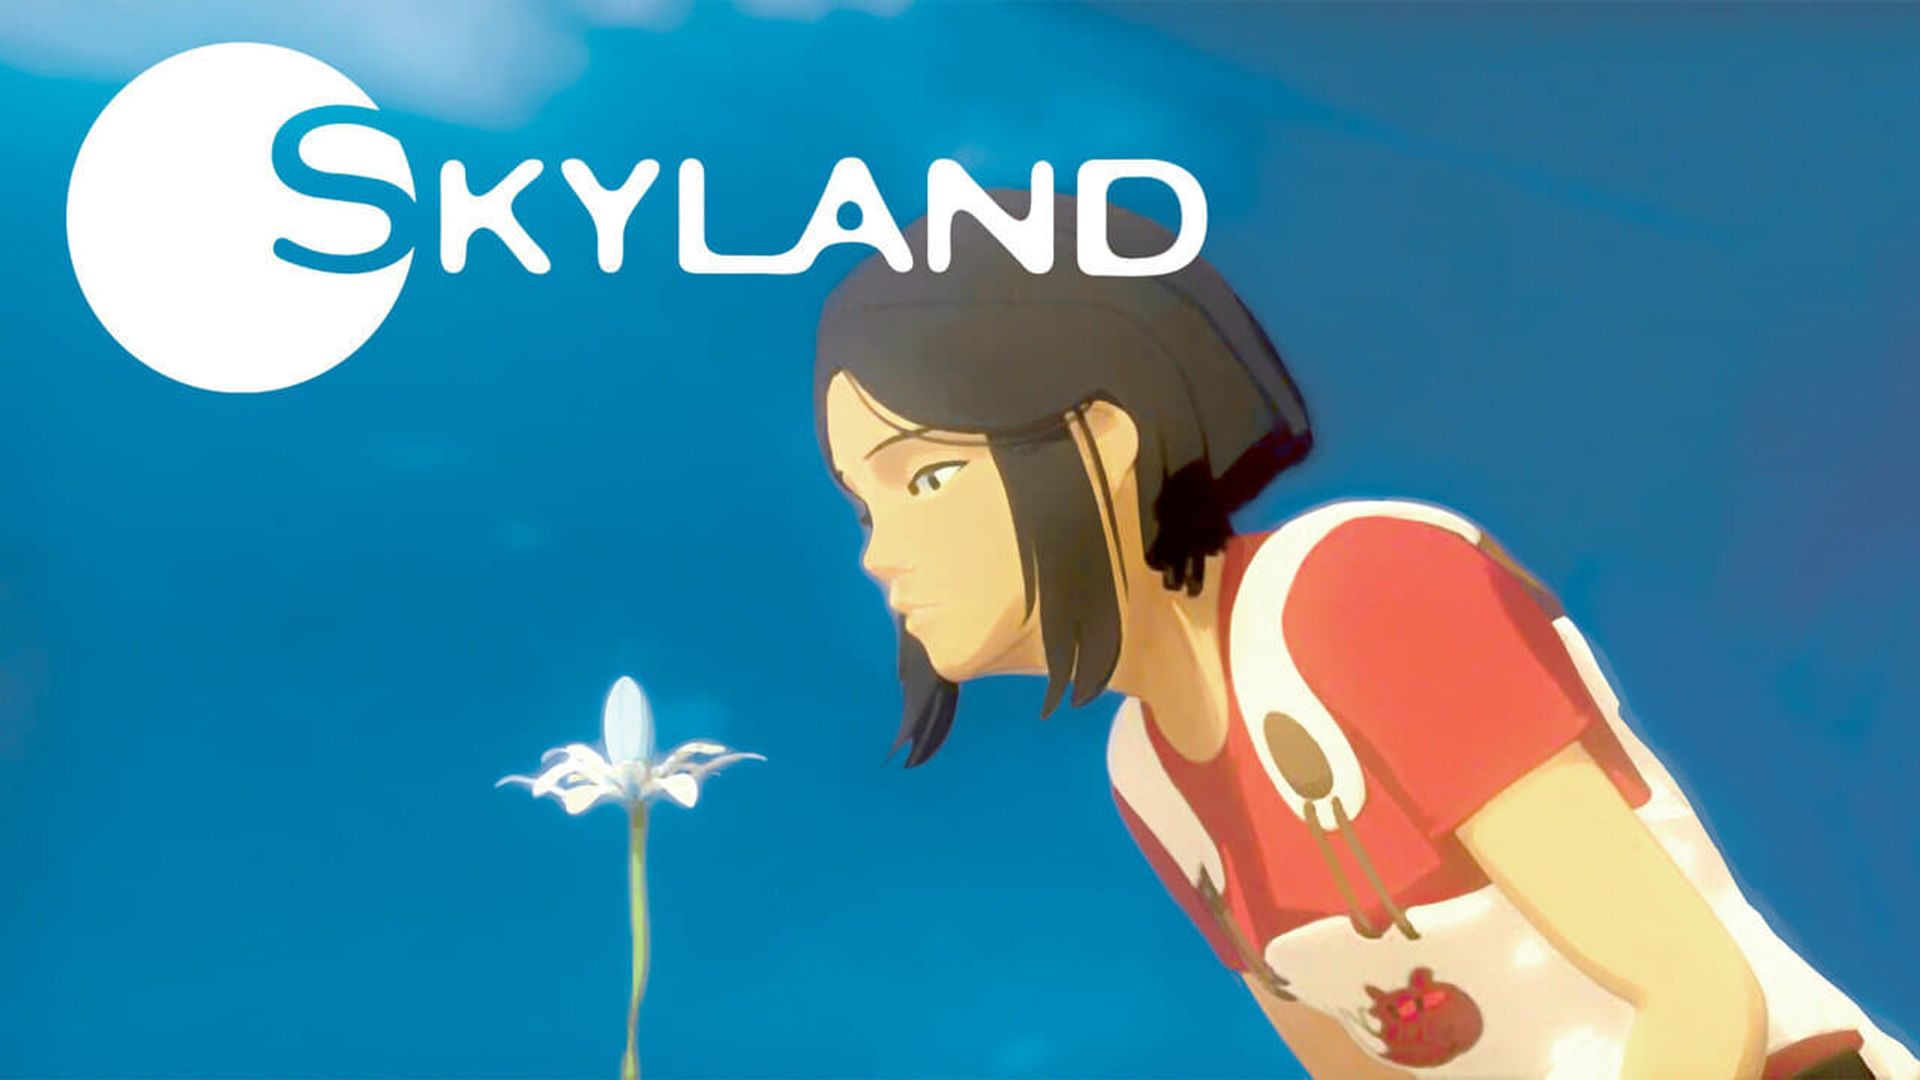 Skyland background